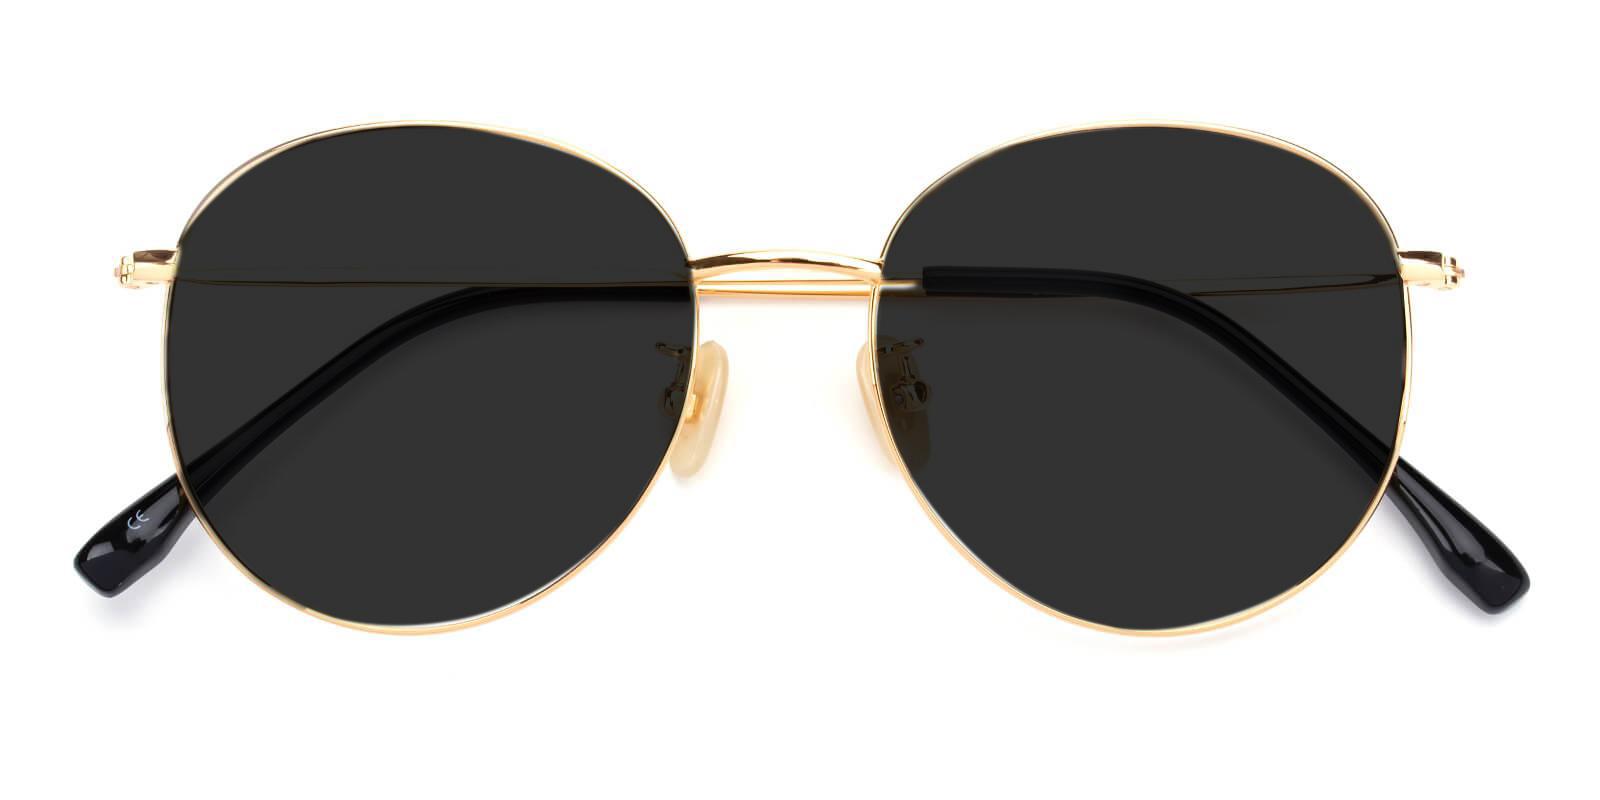 Tower Gold Titanium Sunglasses , Lightweight , NosePads Frames from ABBE Glasses